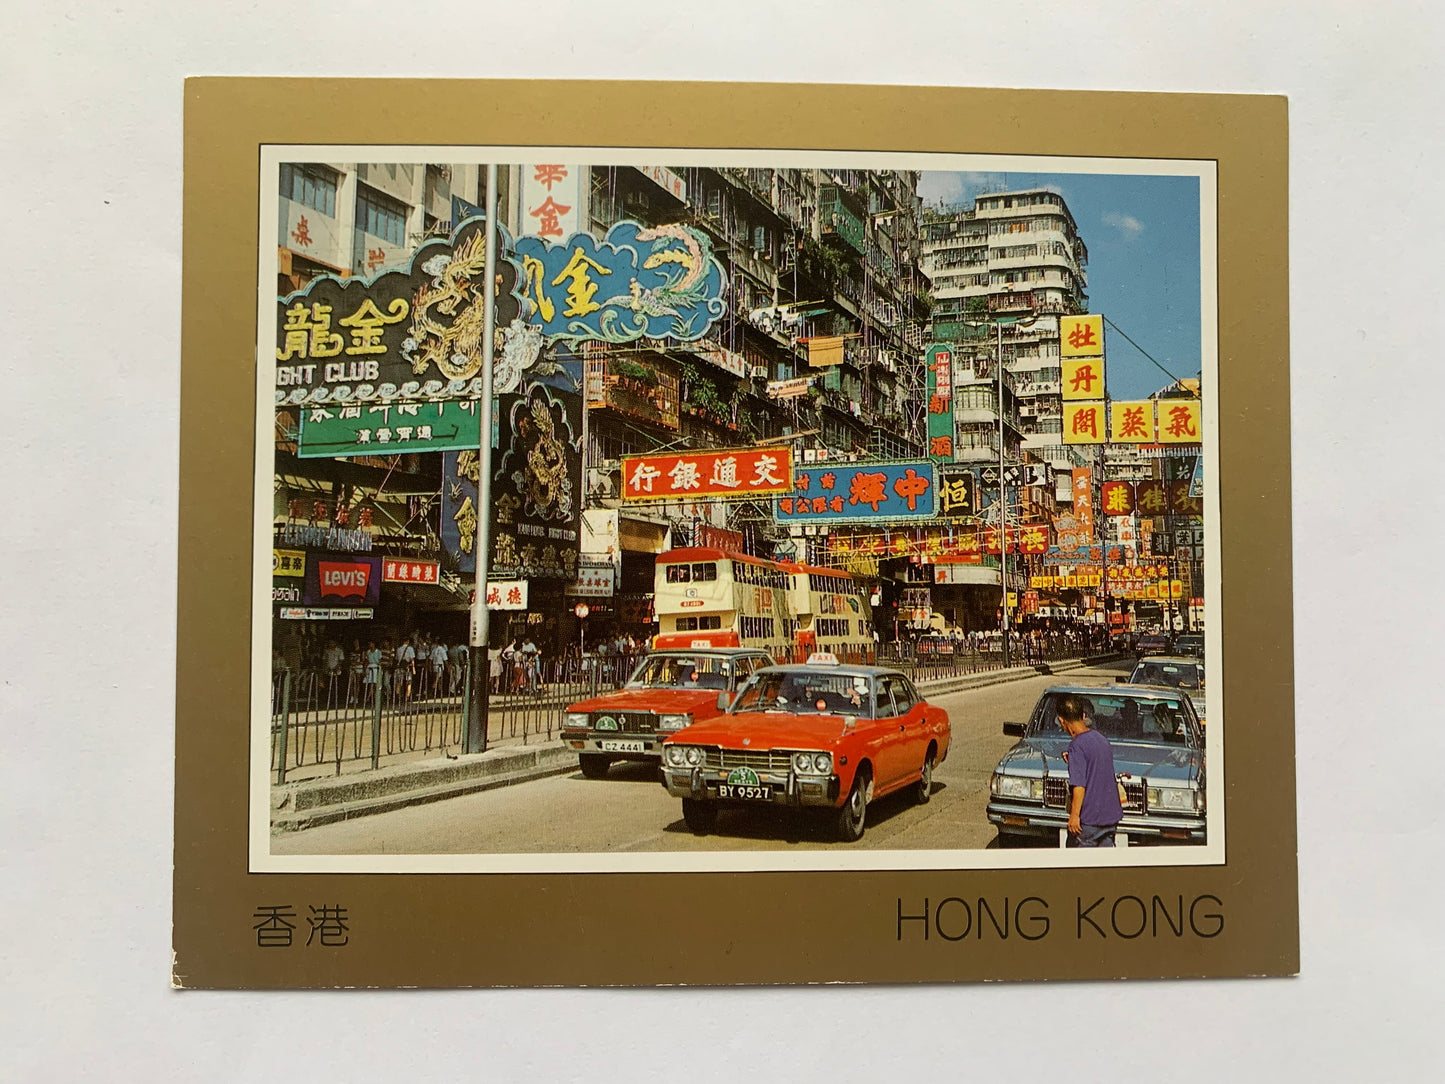 Old postcard - HONG KONG - No.303 - Kowloon street - Asian view card - 1950s - unused